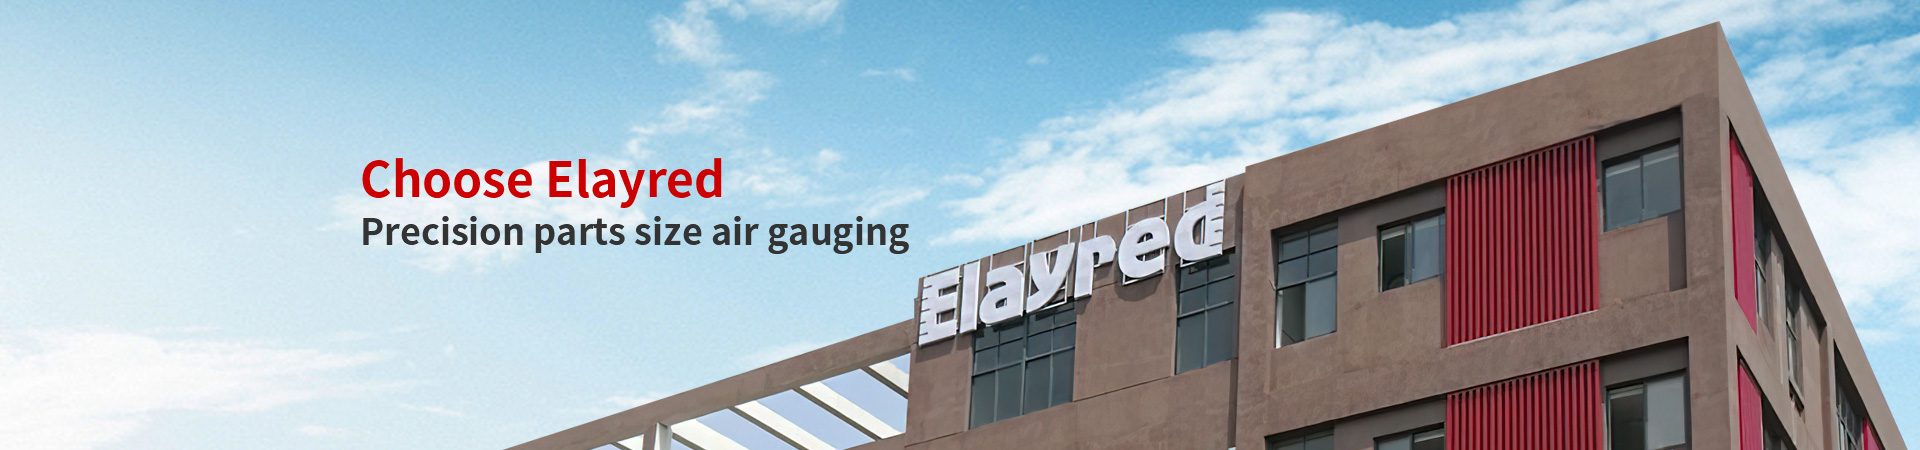 Choose Elayred Precision parts size air gauging